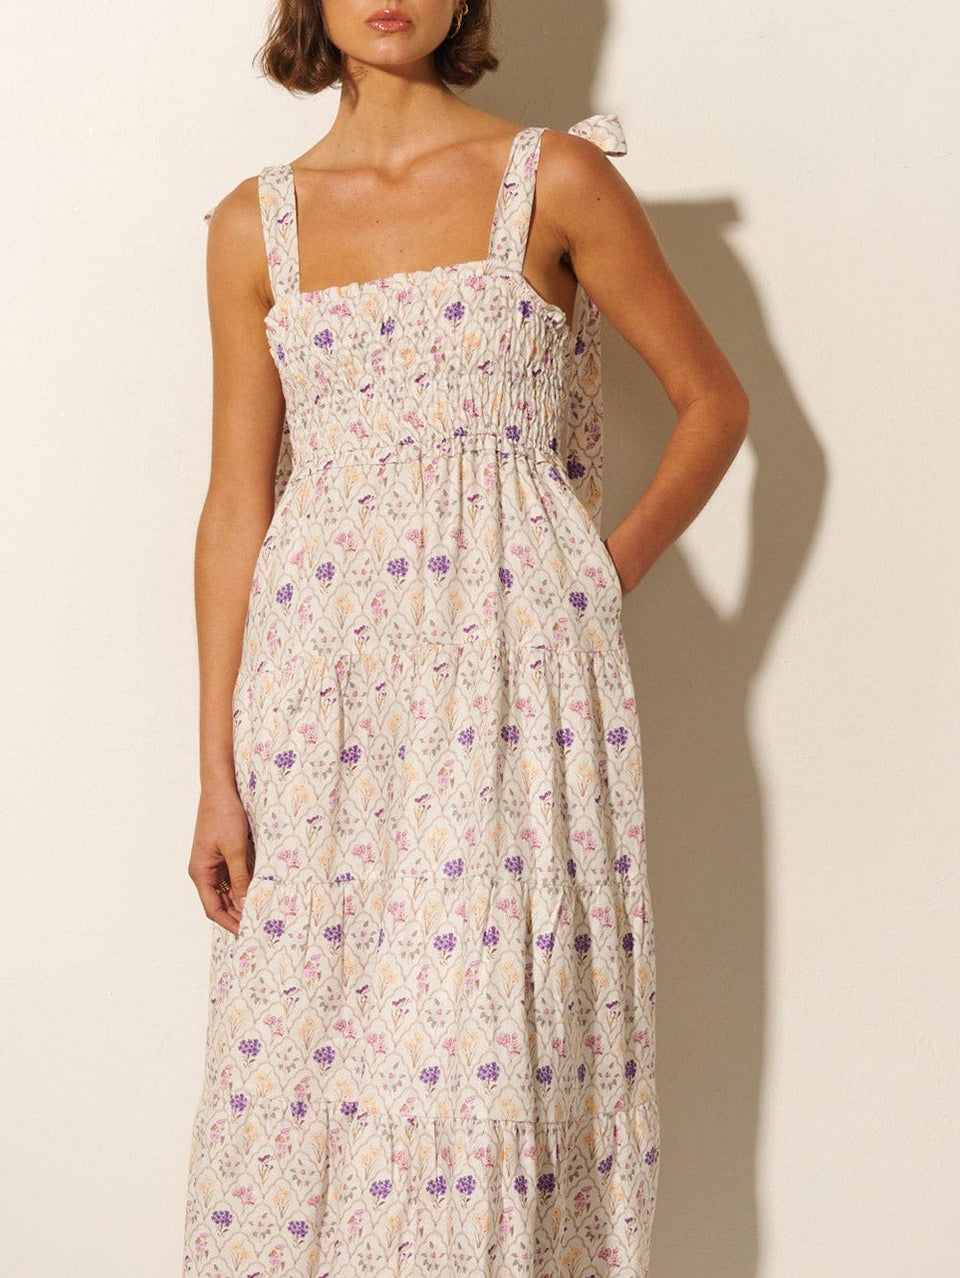 Fleur Midi Dress KIVARI | Model wears white and purple floral print midi dress close up